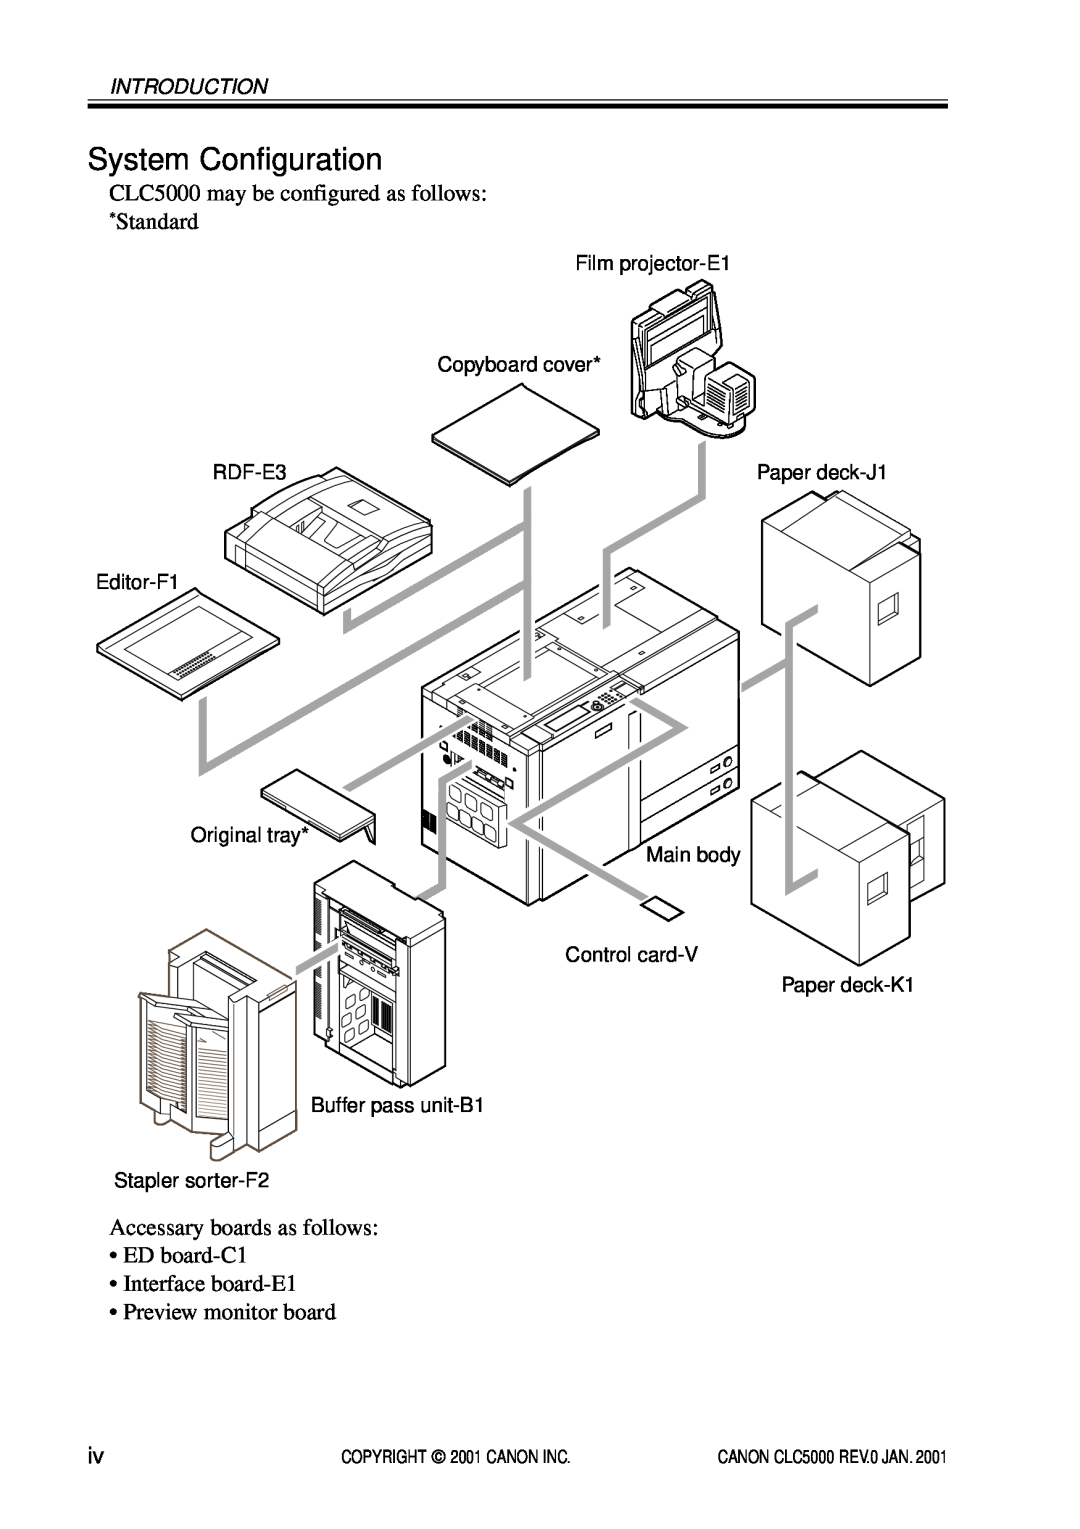 Canon FY8-13GZ-000 manual System Configuration, Introduction, Film projector-E1, Copyboard cover, RDF-E3, Paper deck-J1 